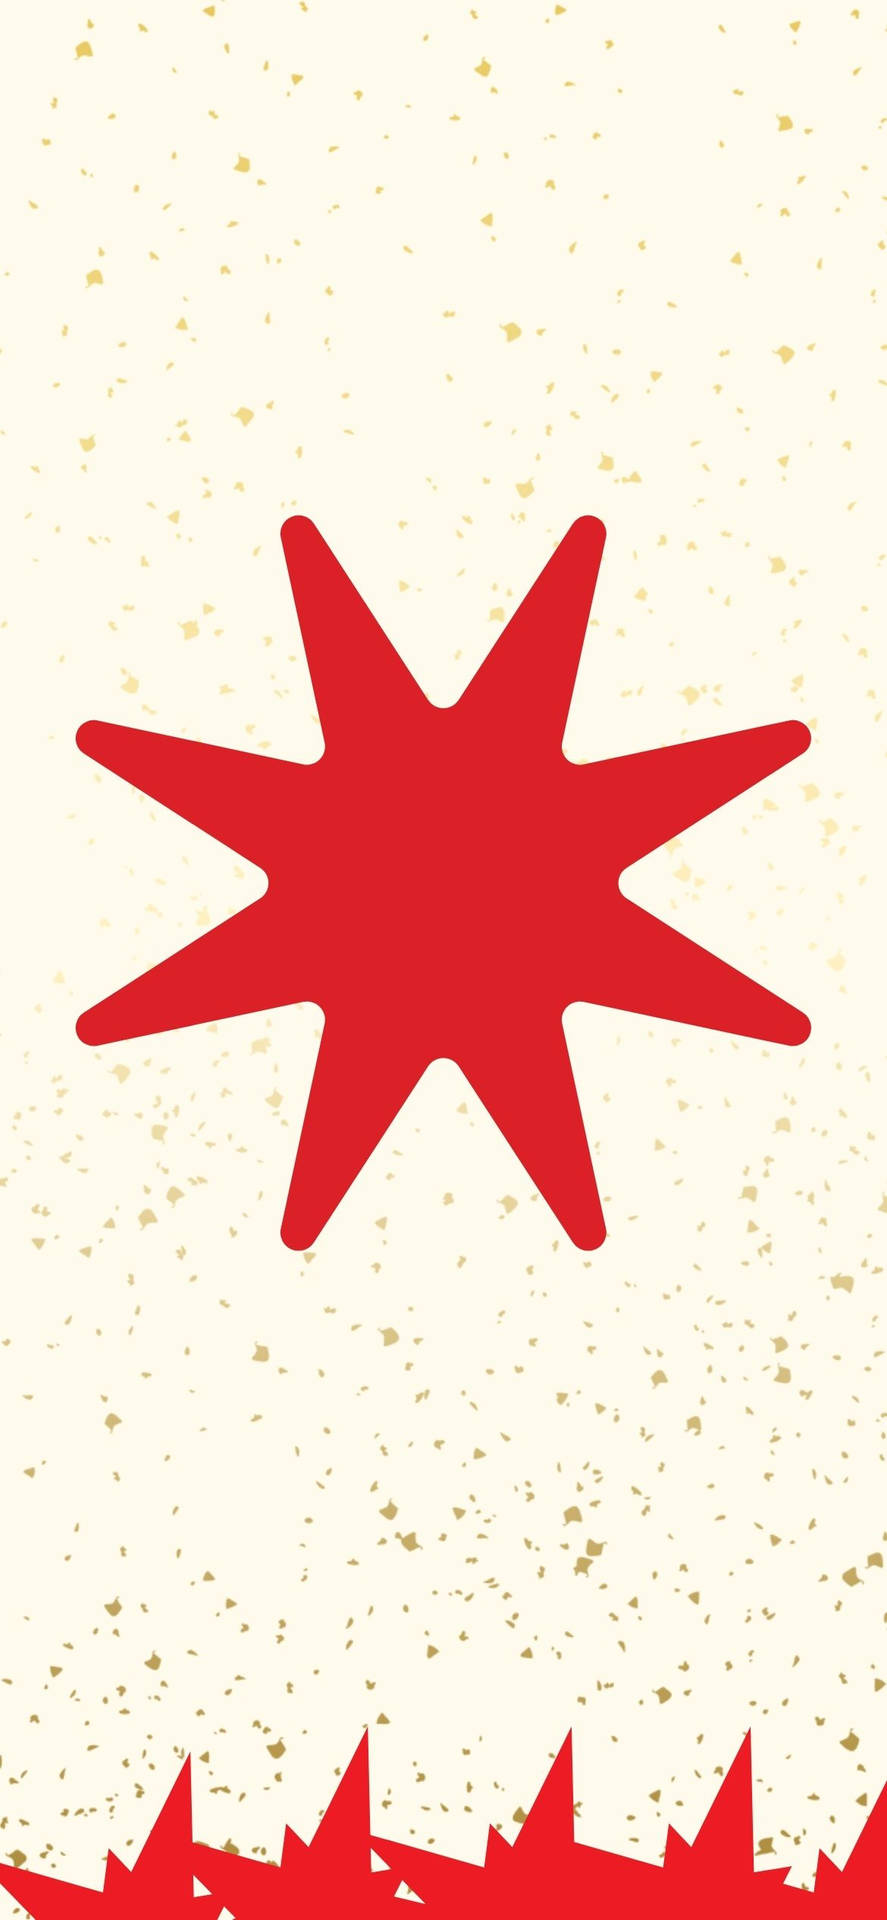 Otte anglede røde stjernedesign pynte tapetet. Wallpaper